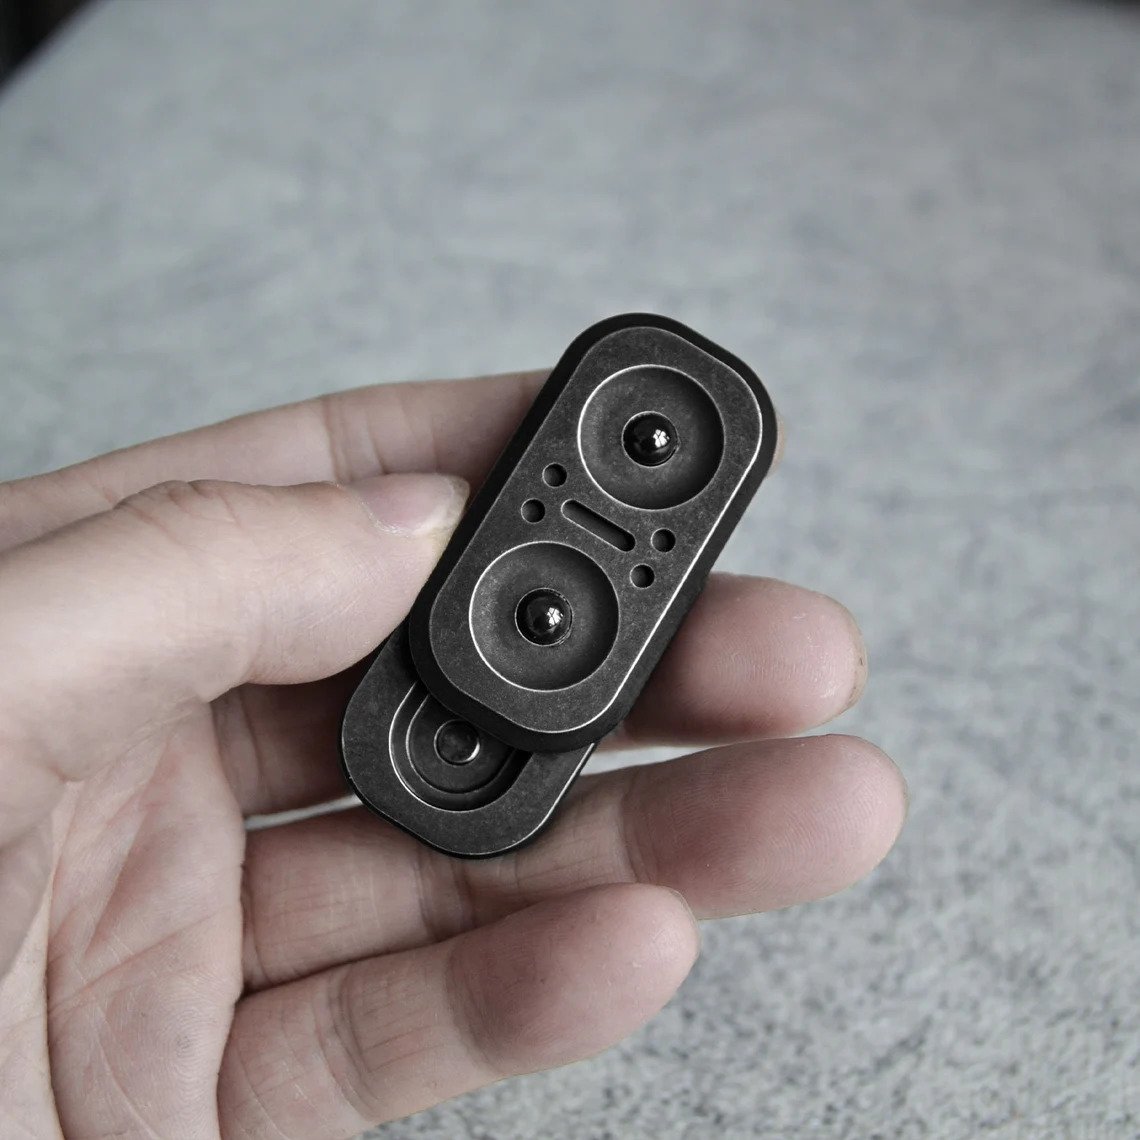 Wanwu Camera Mini Fidget Slider EDC Fidget Toy Stress Relief Toy